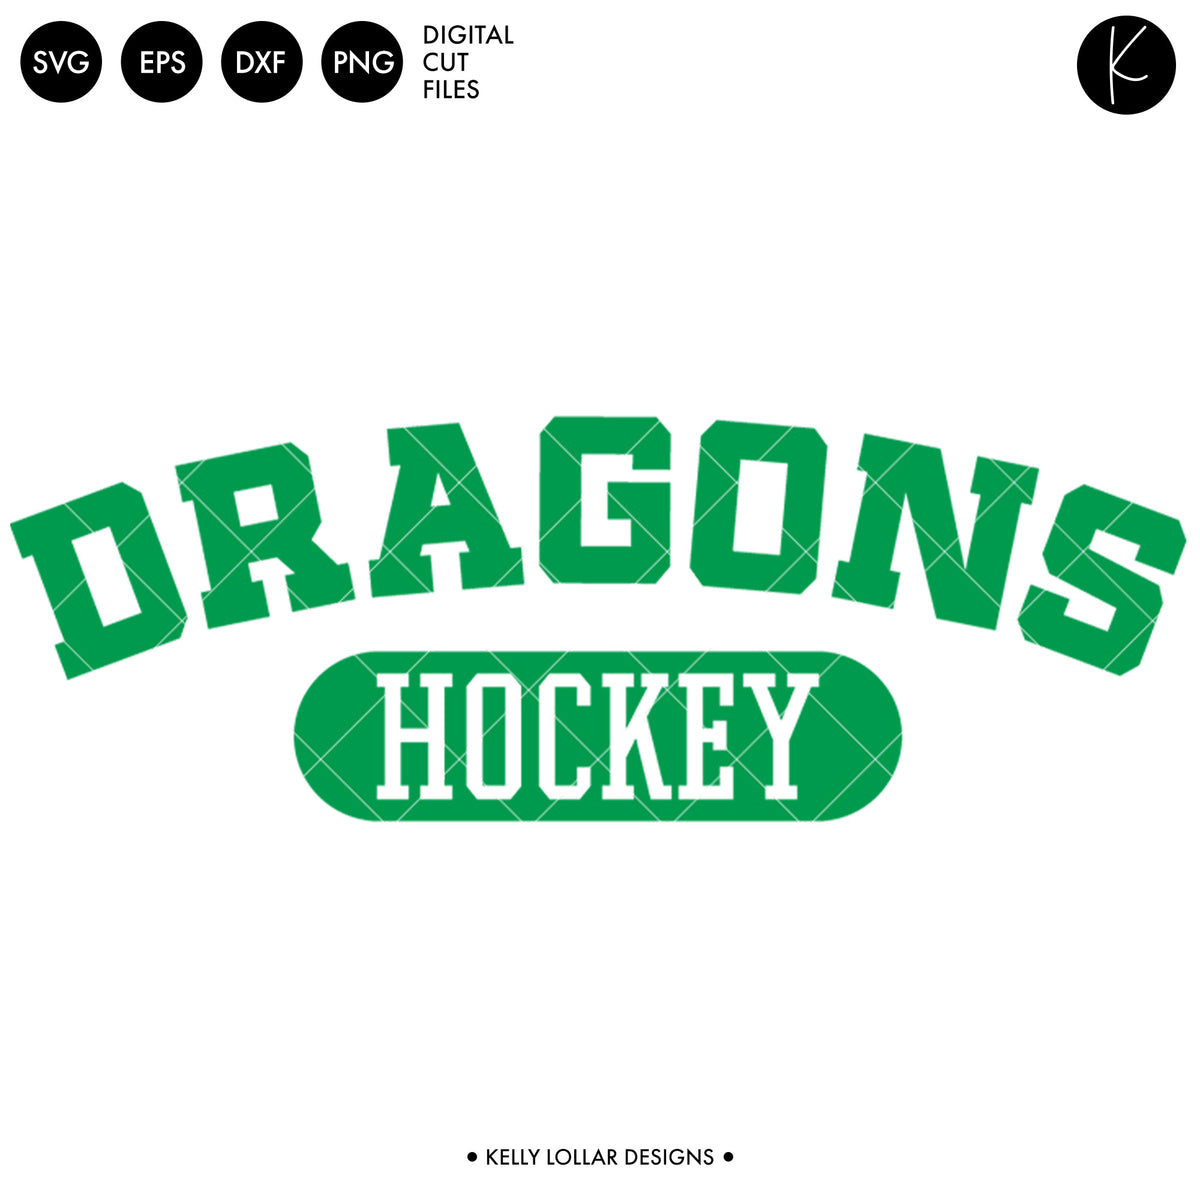 Dragons Hockey Bundle | SVG DXF EPS PNG Cut Files